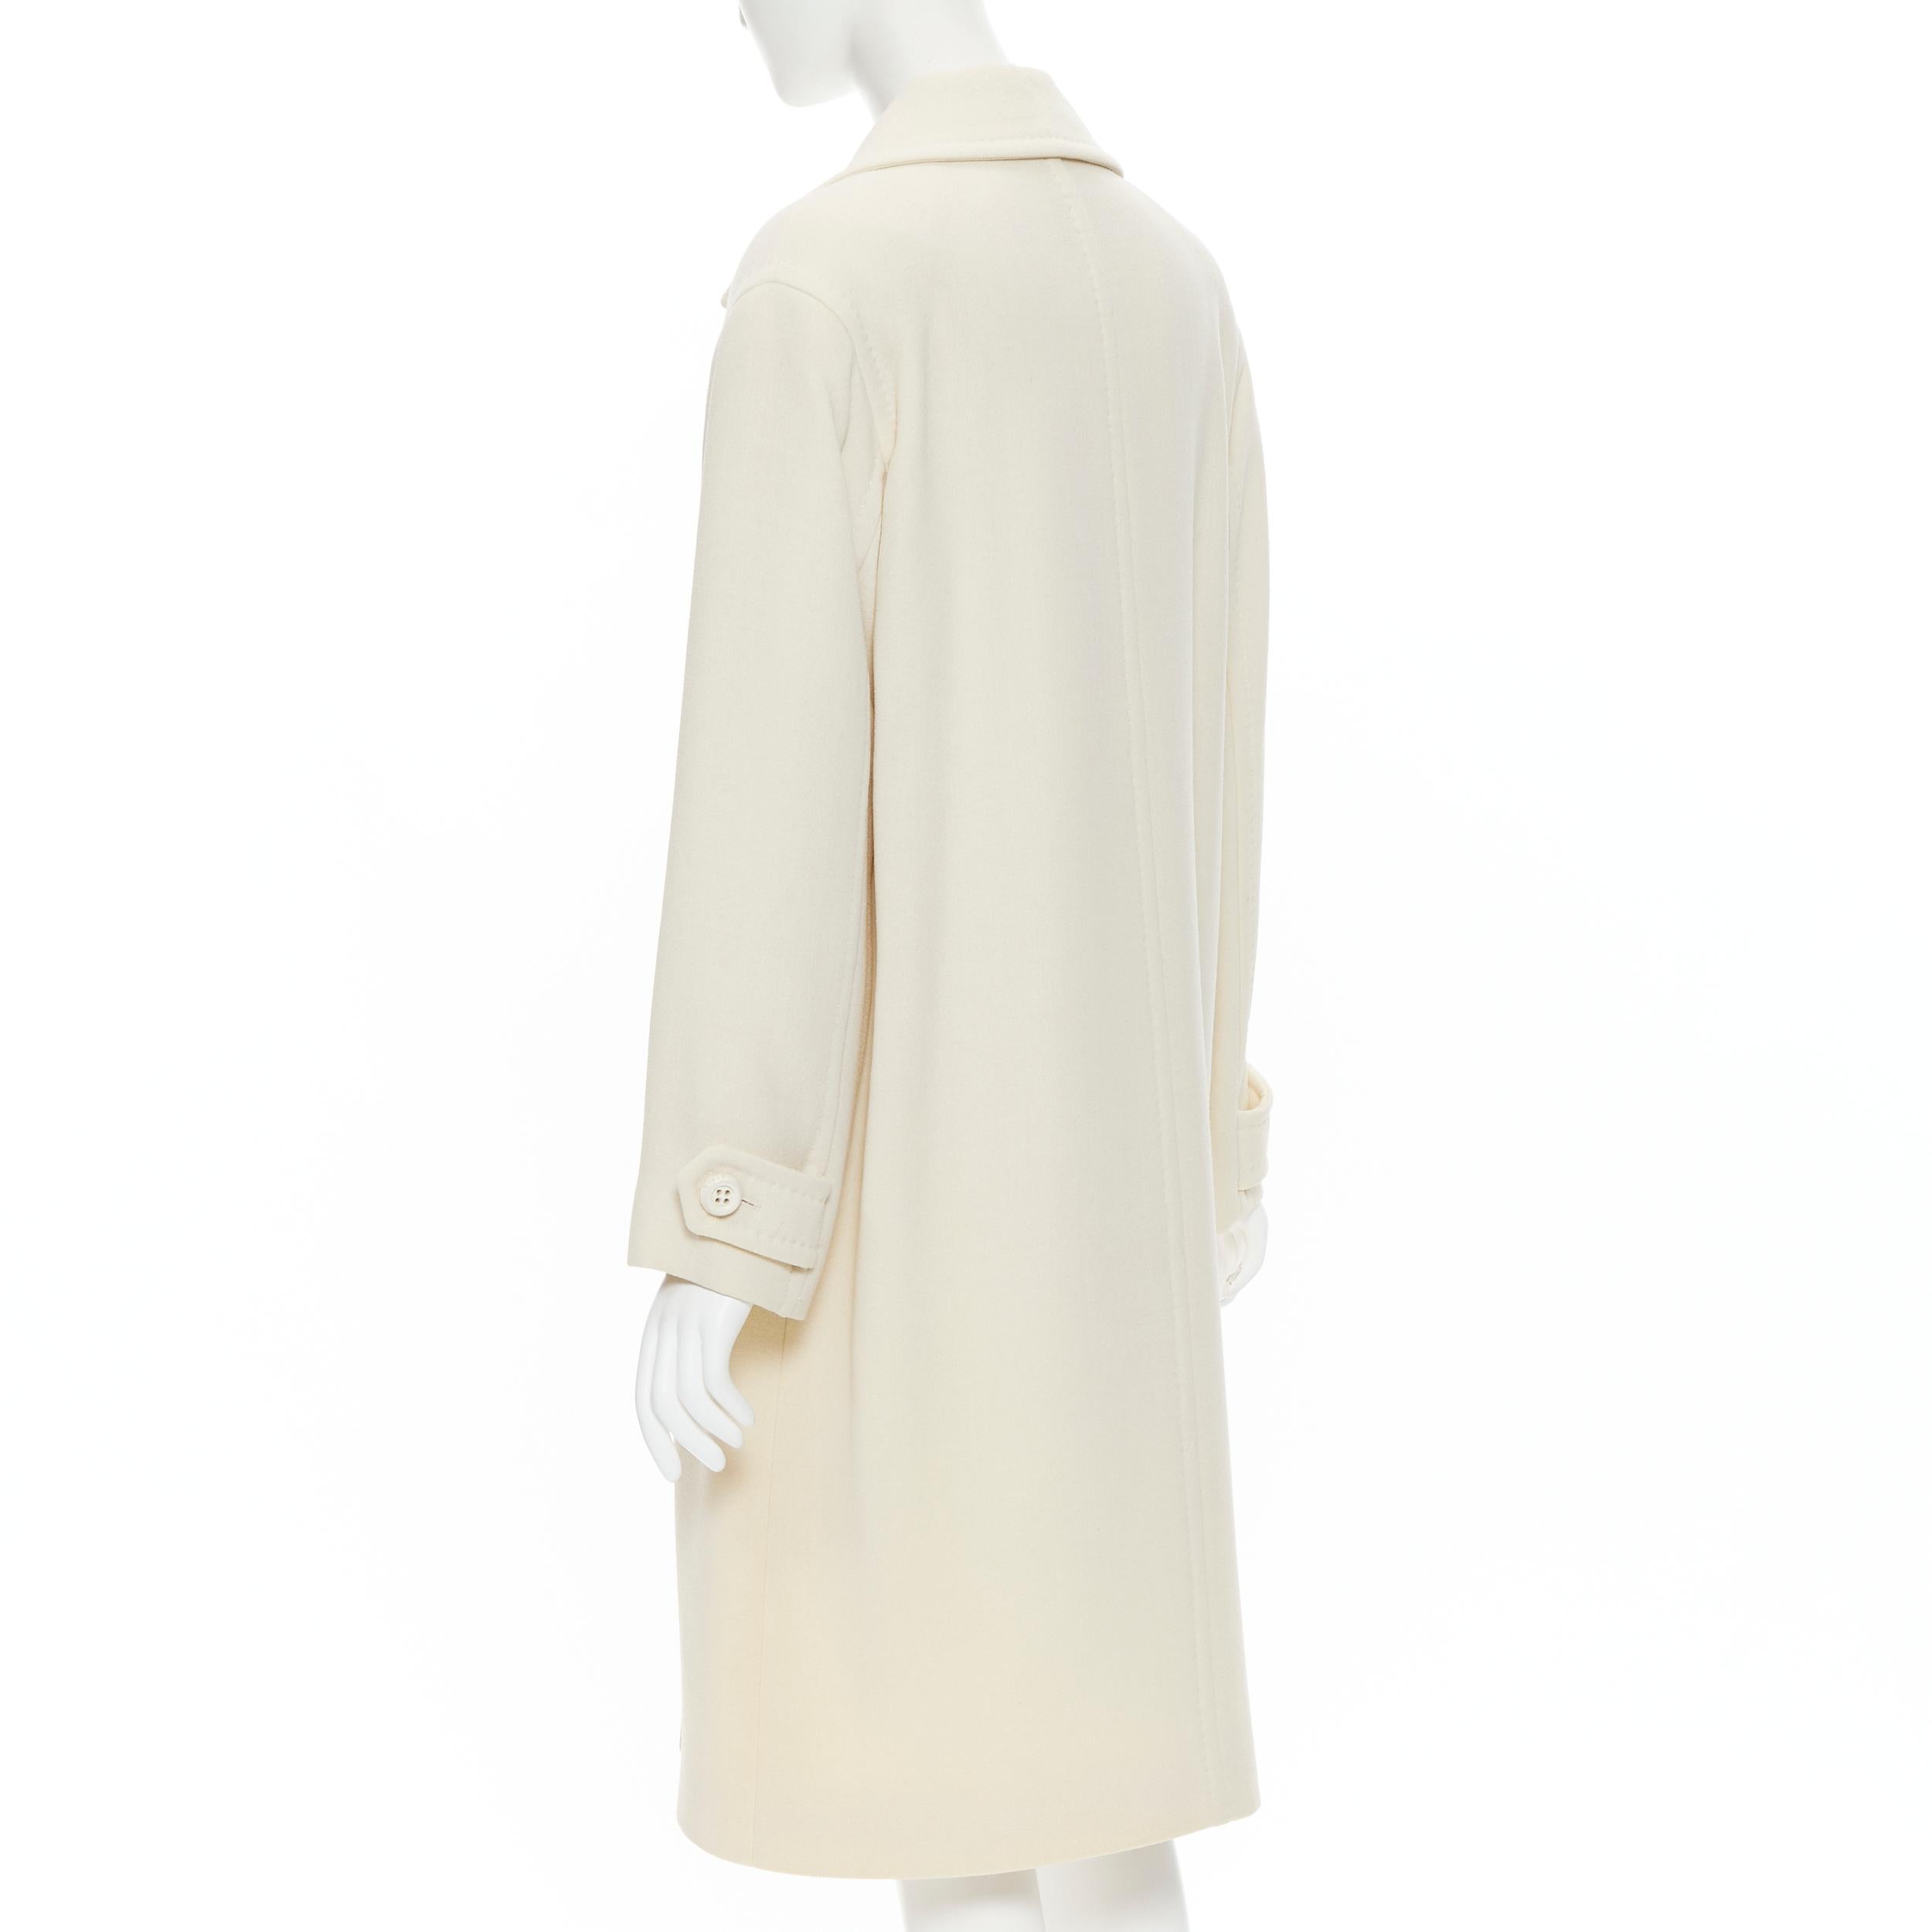 GIANFRANCO FERRE STUDIO ivory wool crepe double breasted coat jacket IT42 M 1